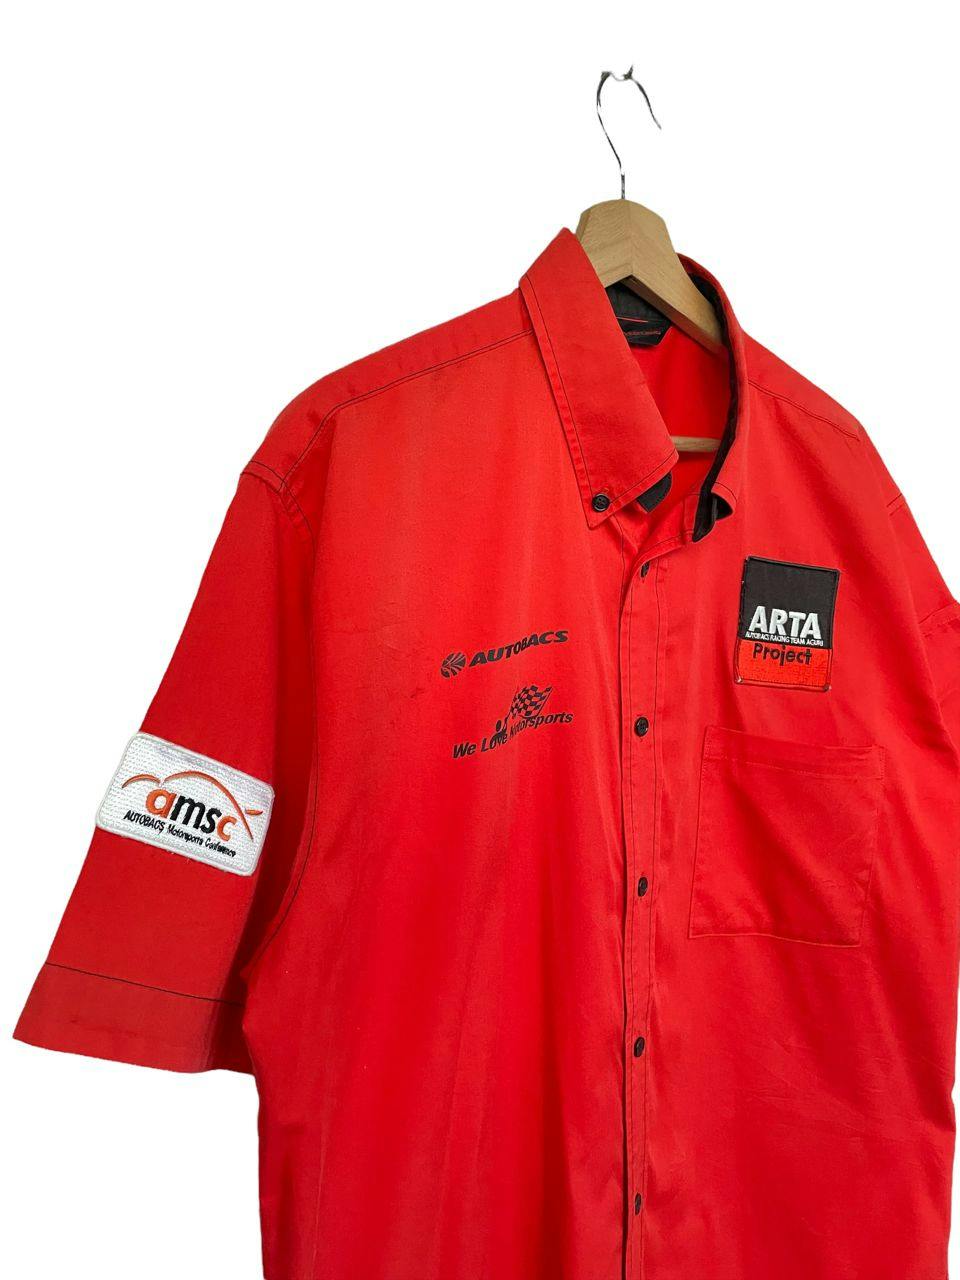 Workers - Nice Autobacs Racing Team Arta Project Shirt - 4